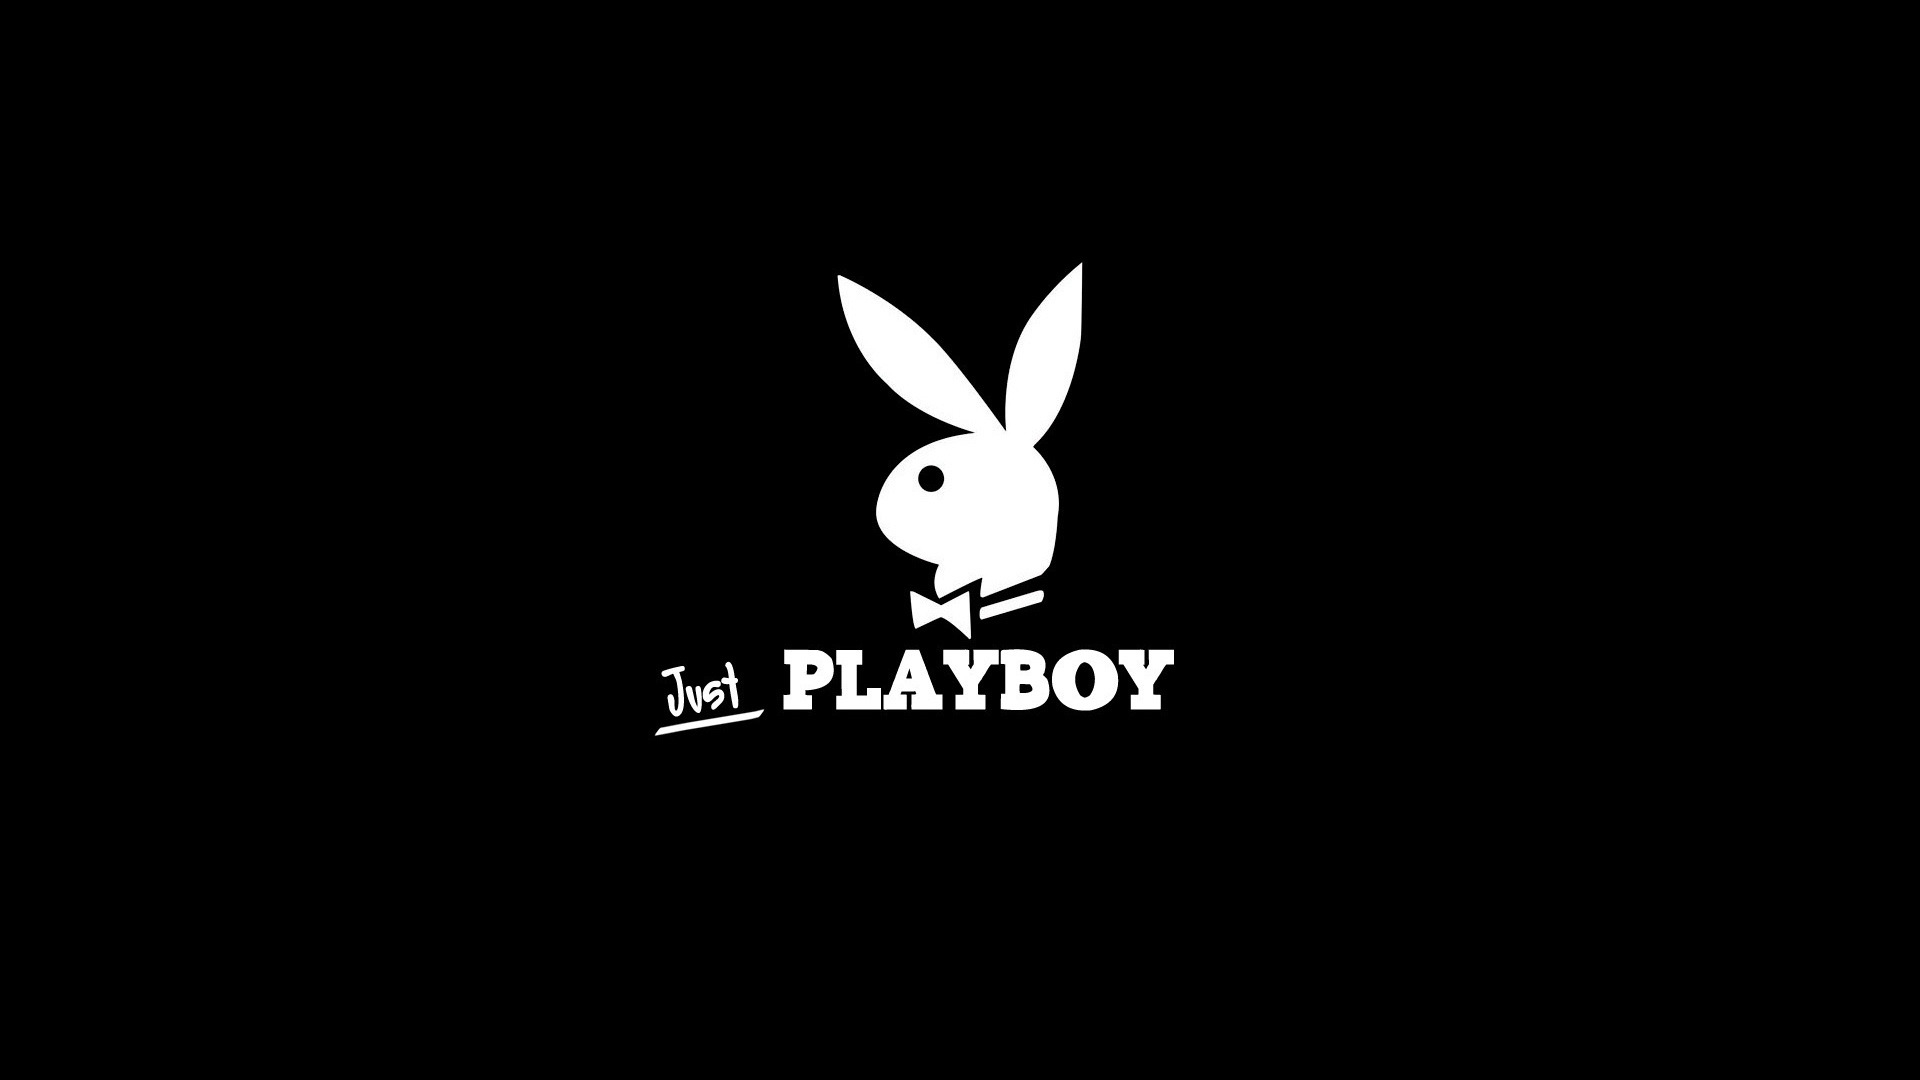 Playboy Logo for 1920 x 1080 HDTV 1080p resolution